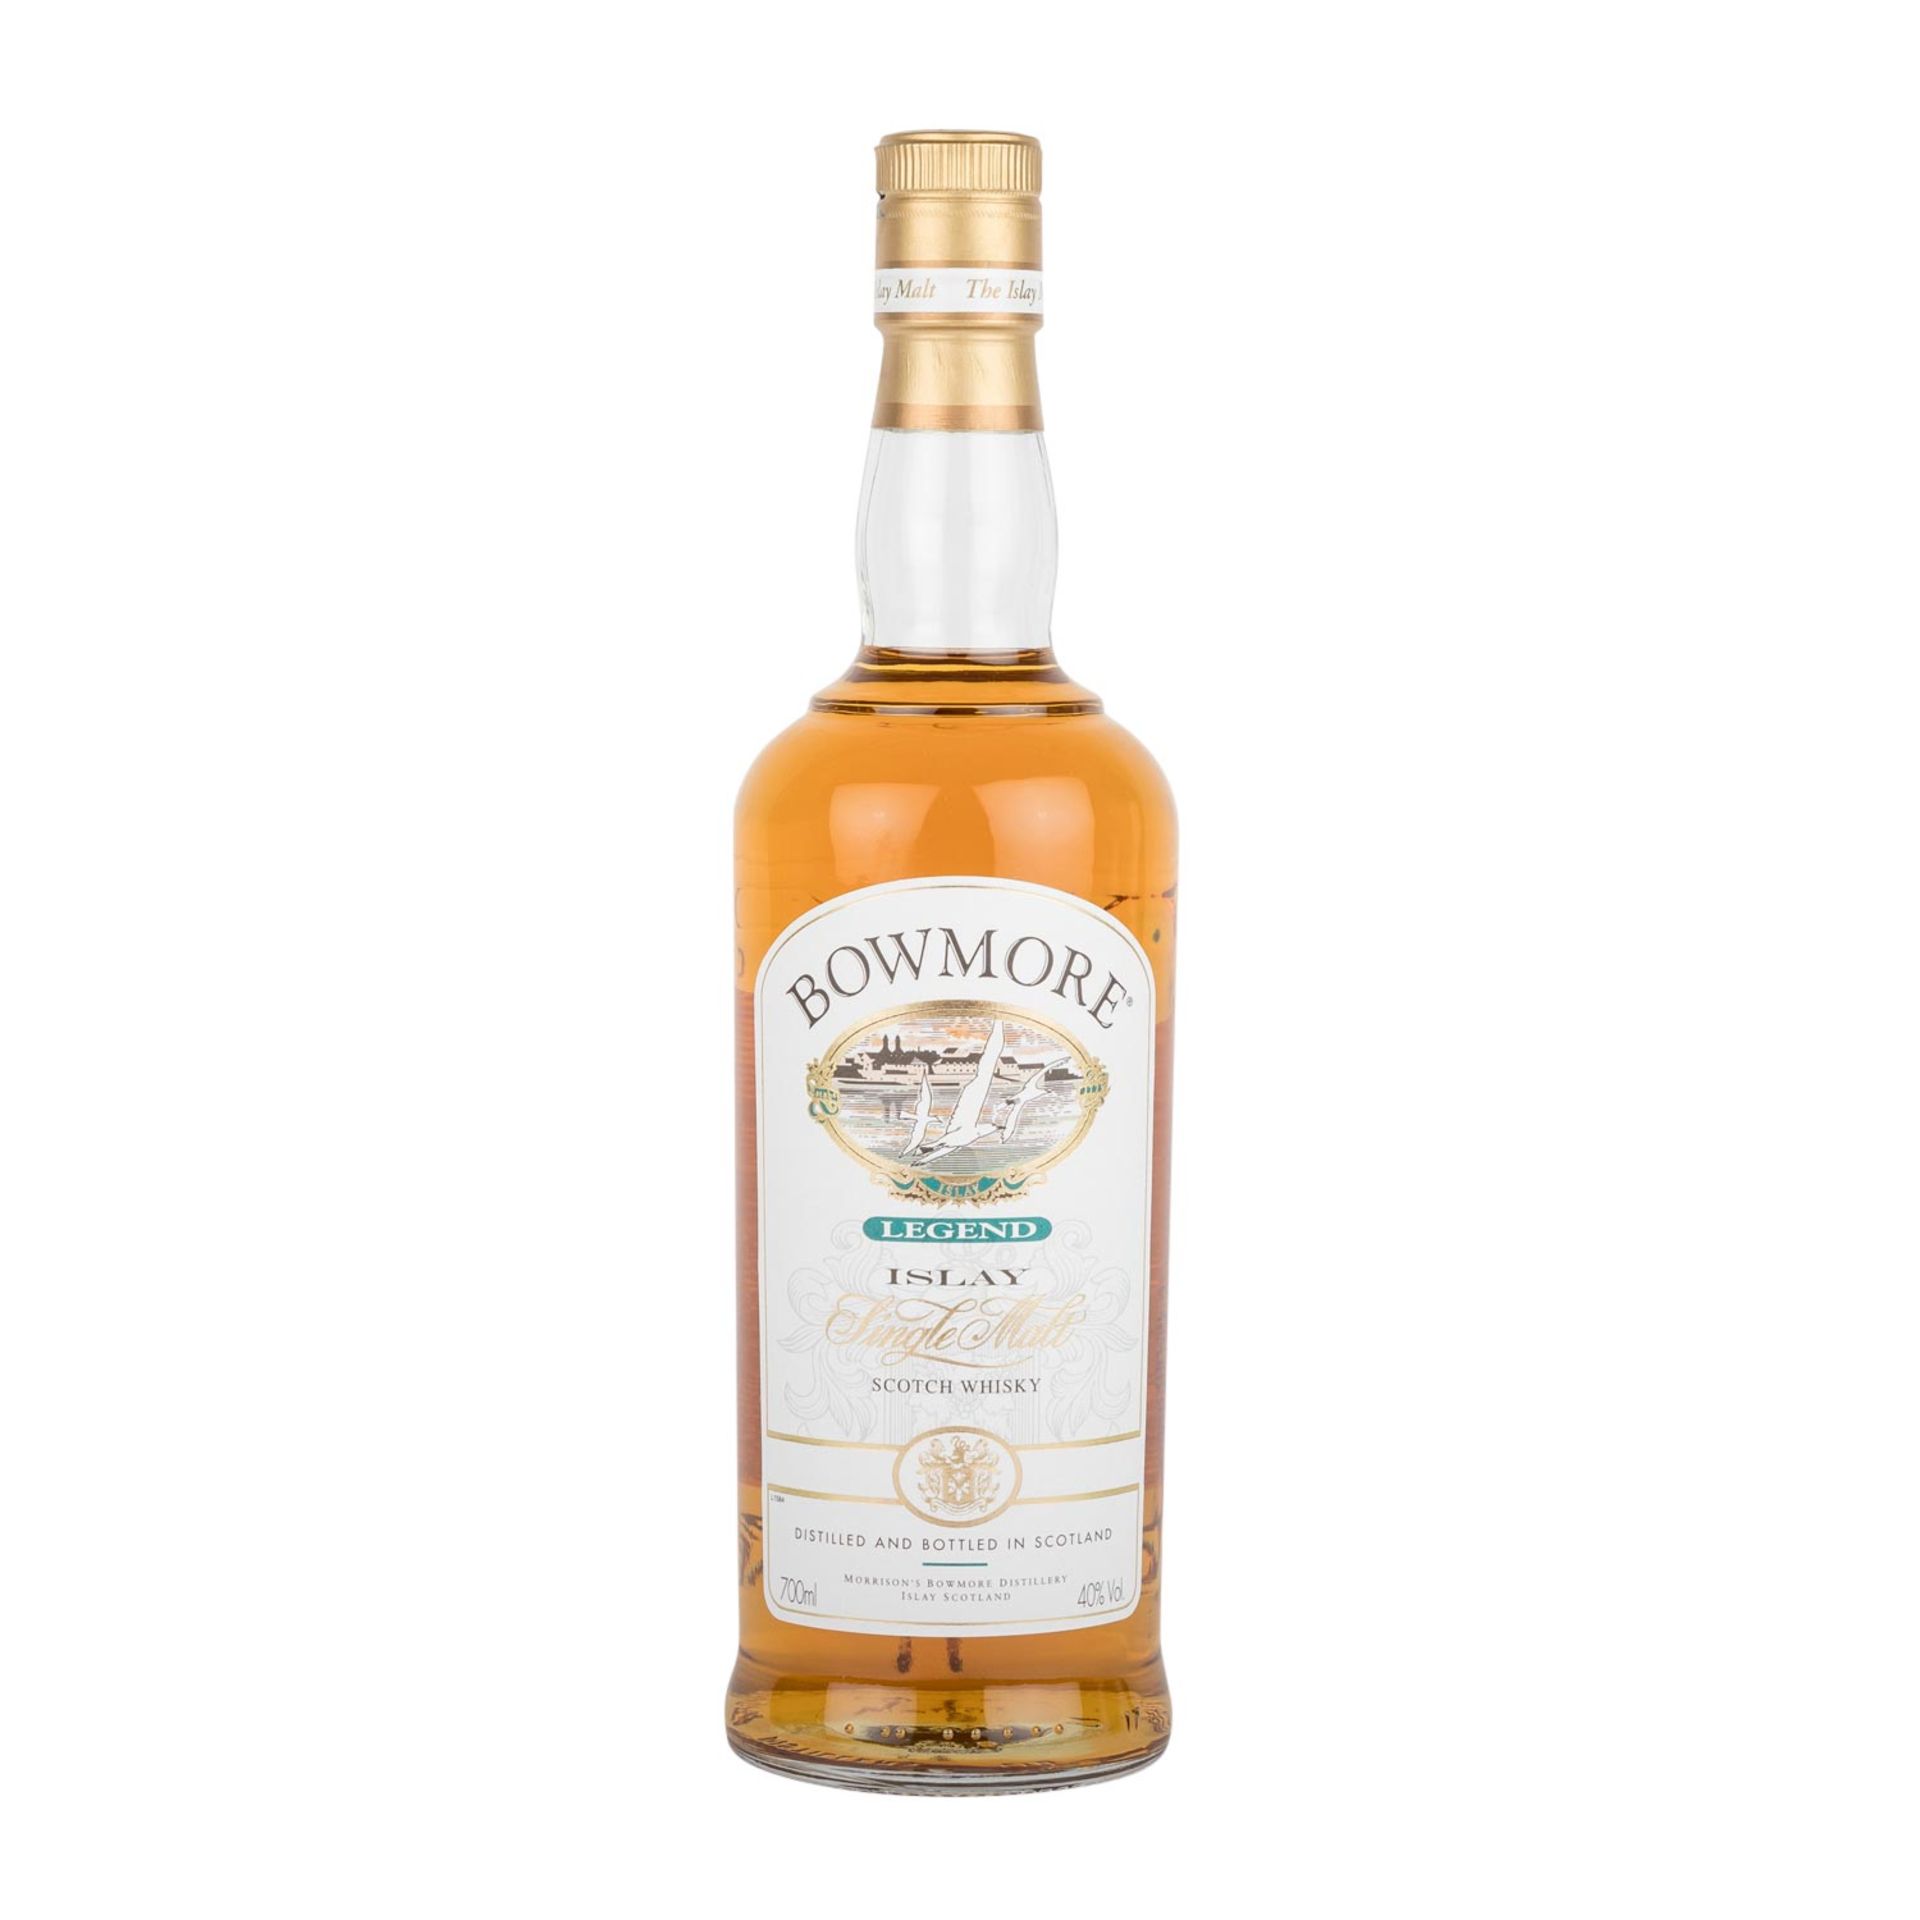 BOWMORE Single Malt Scotch Whisky 'LEGEND' - Image 2 of 5